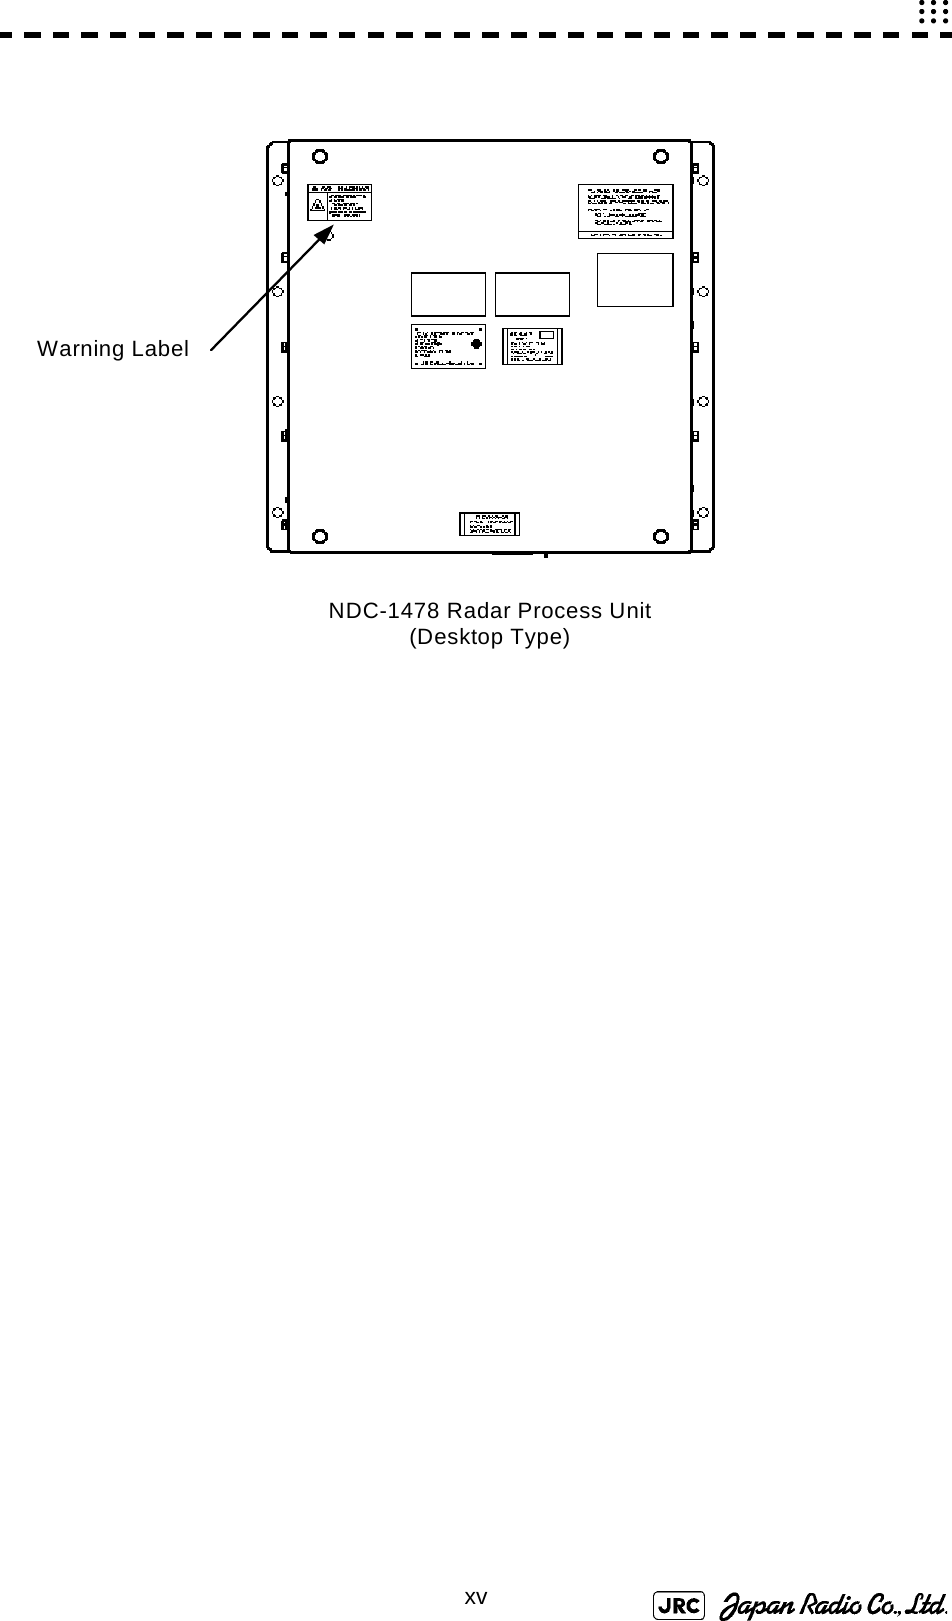 xvNDC-1478 Radar Process Unit(Desktop Type)Warning Label